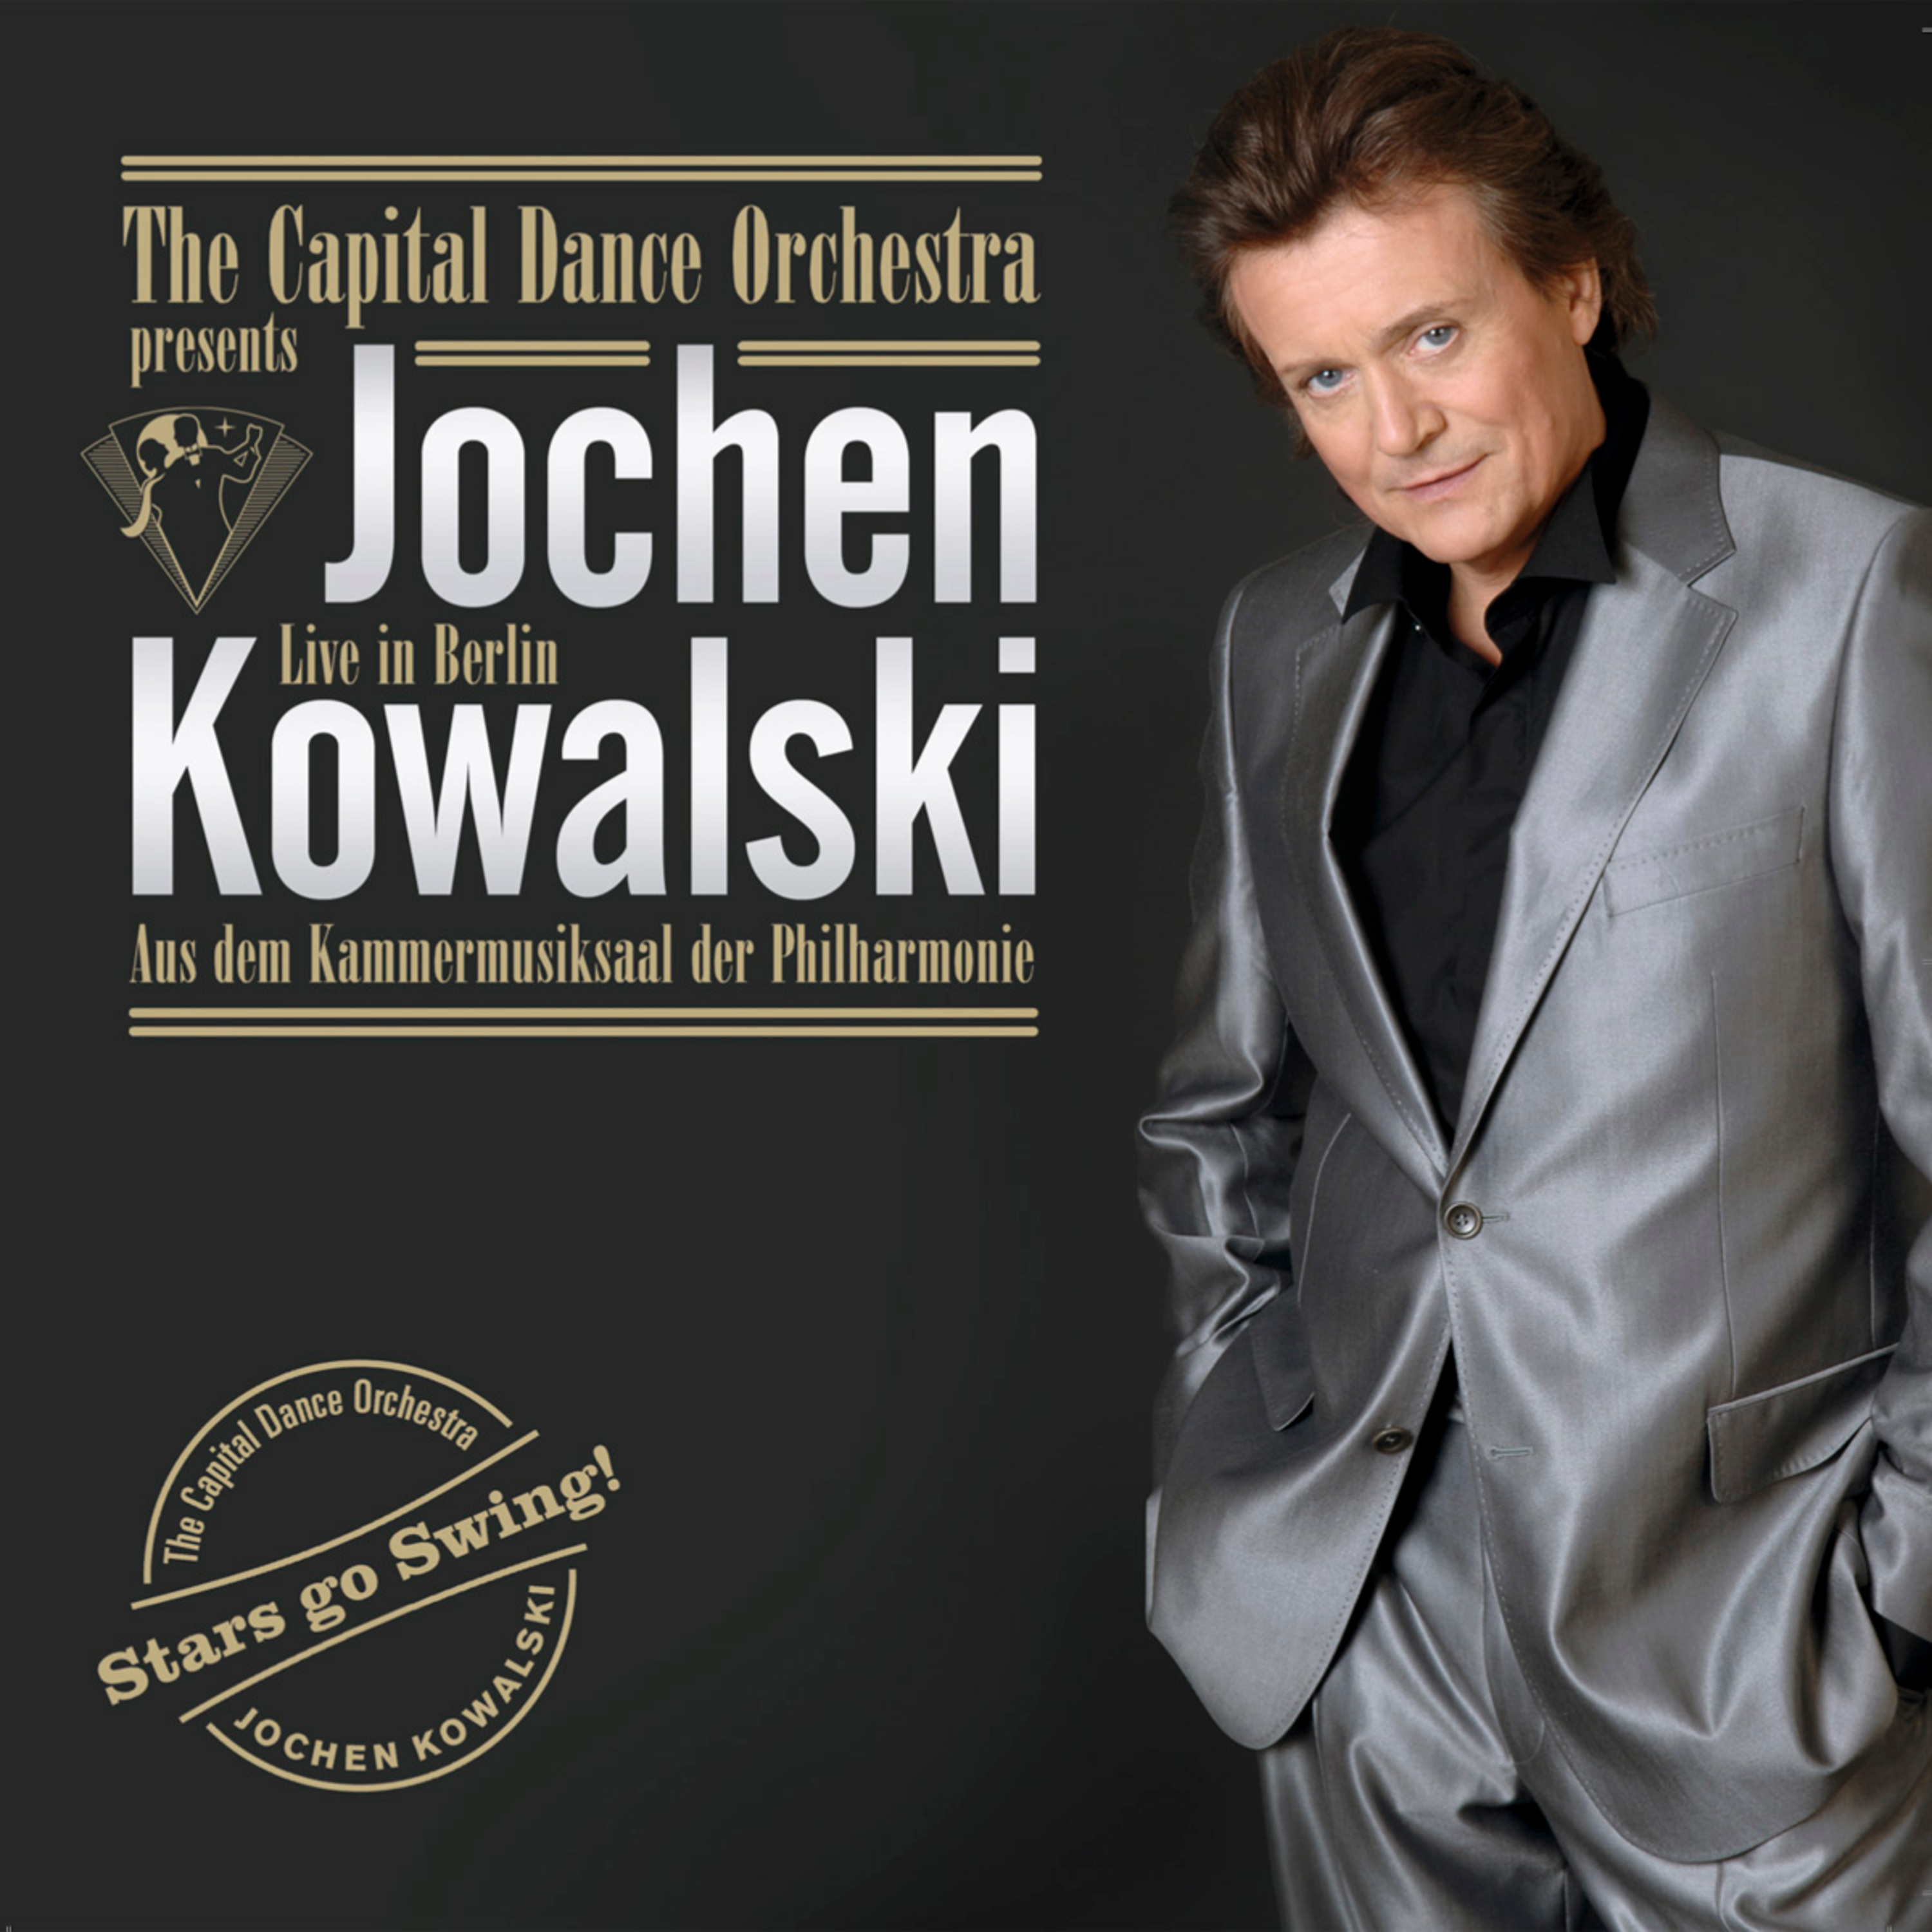 The Capital Dance Orchestra presents Jochen Kowalski